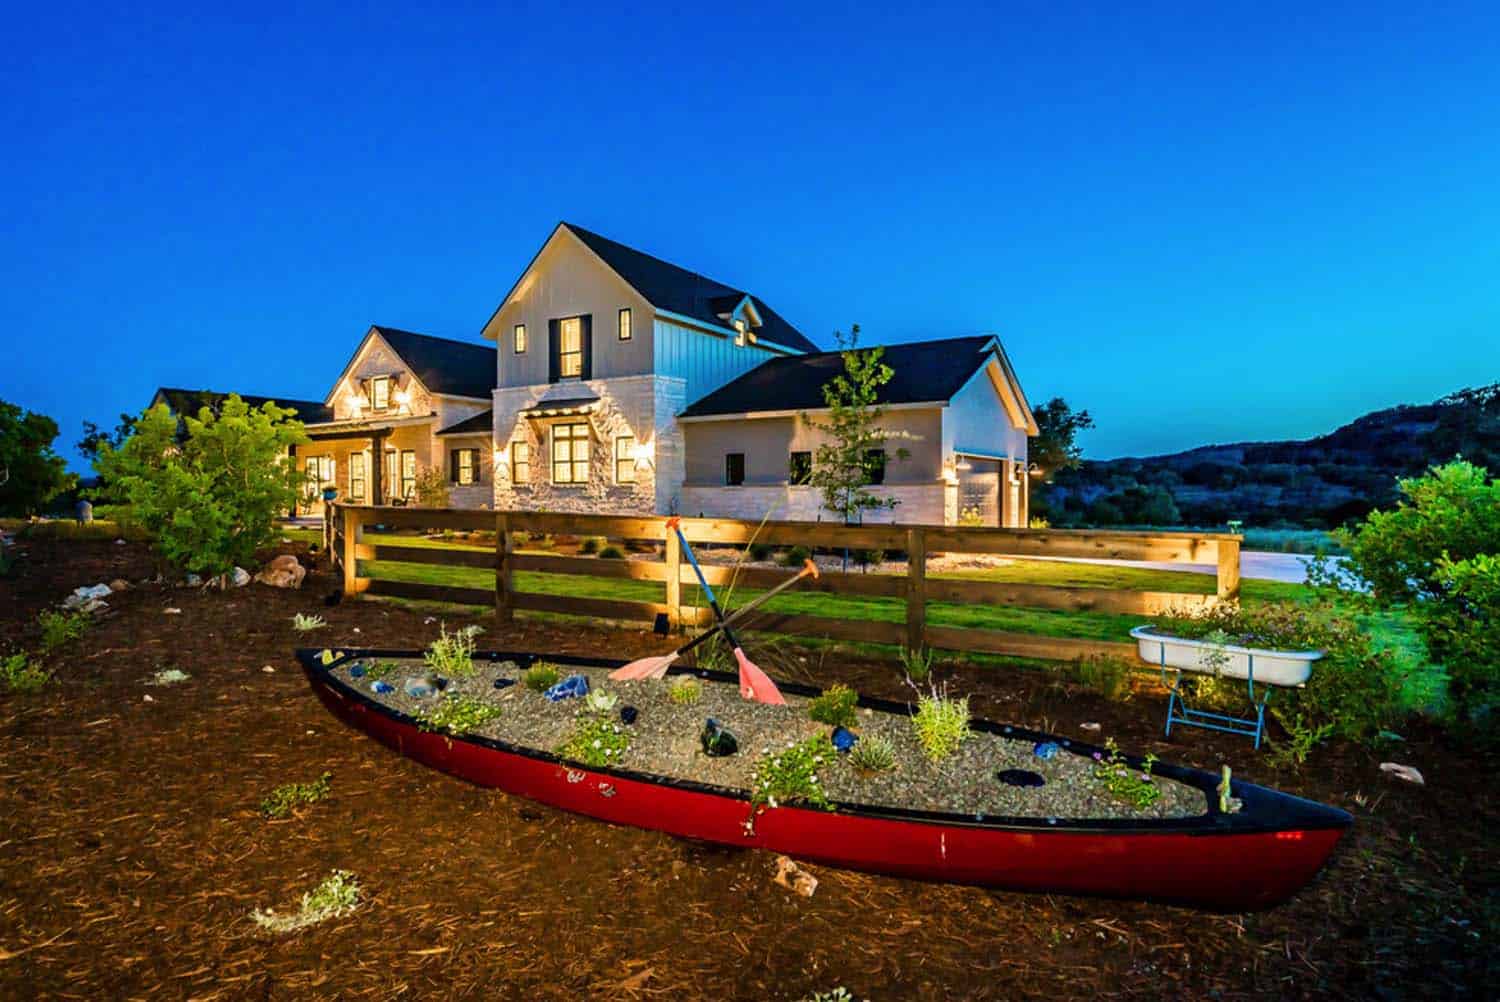 farmhouse-style-home-exterior